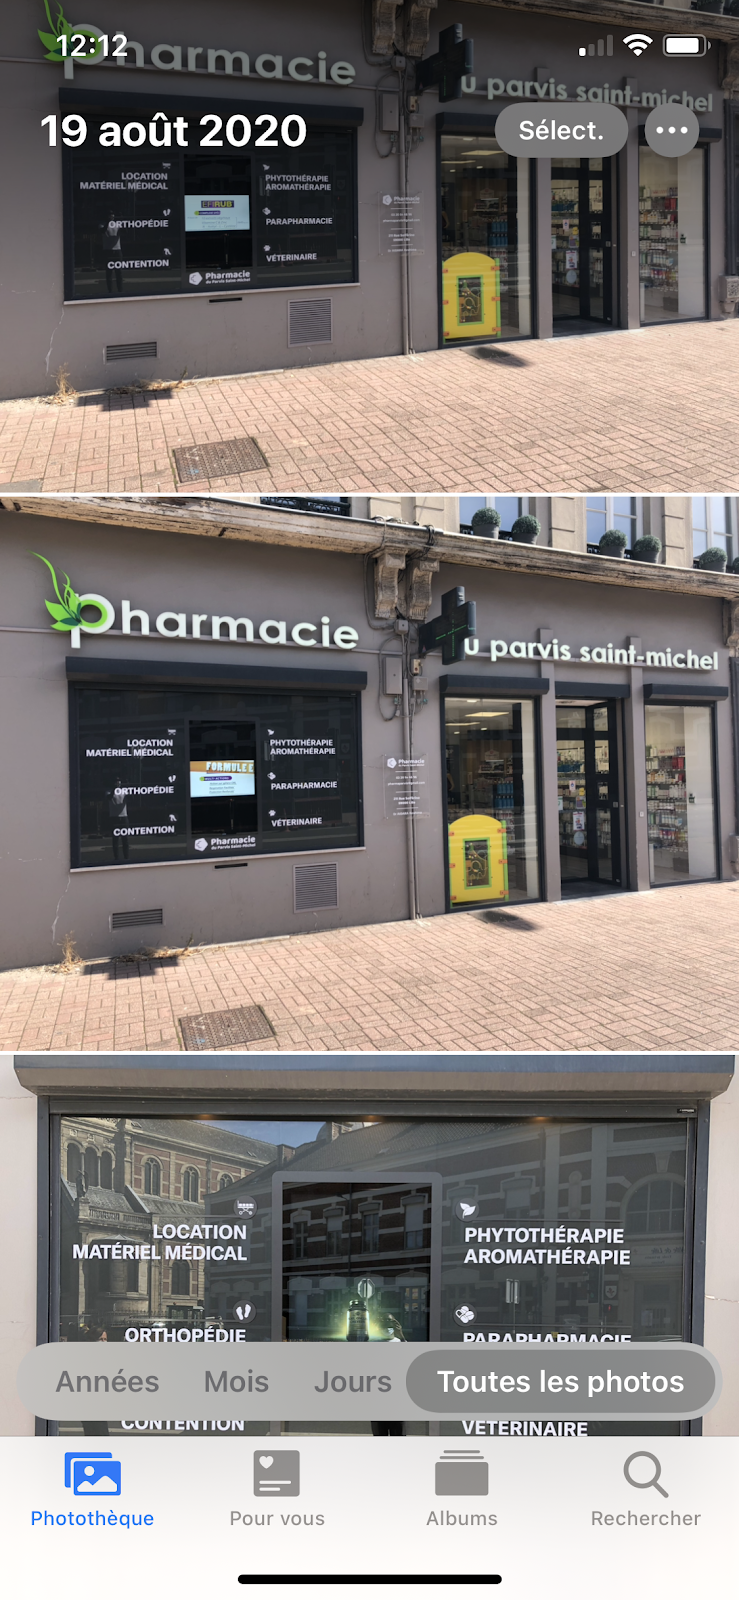 Pharmacie du Parvis Saint-Michel